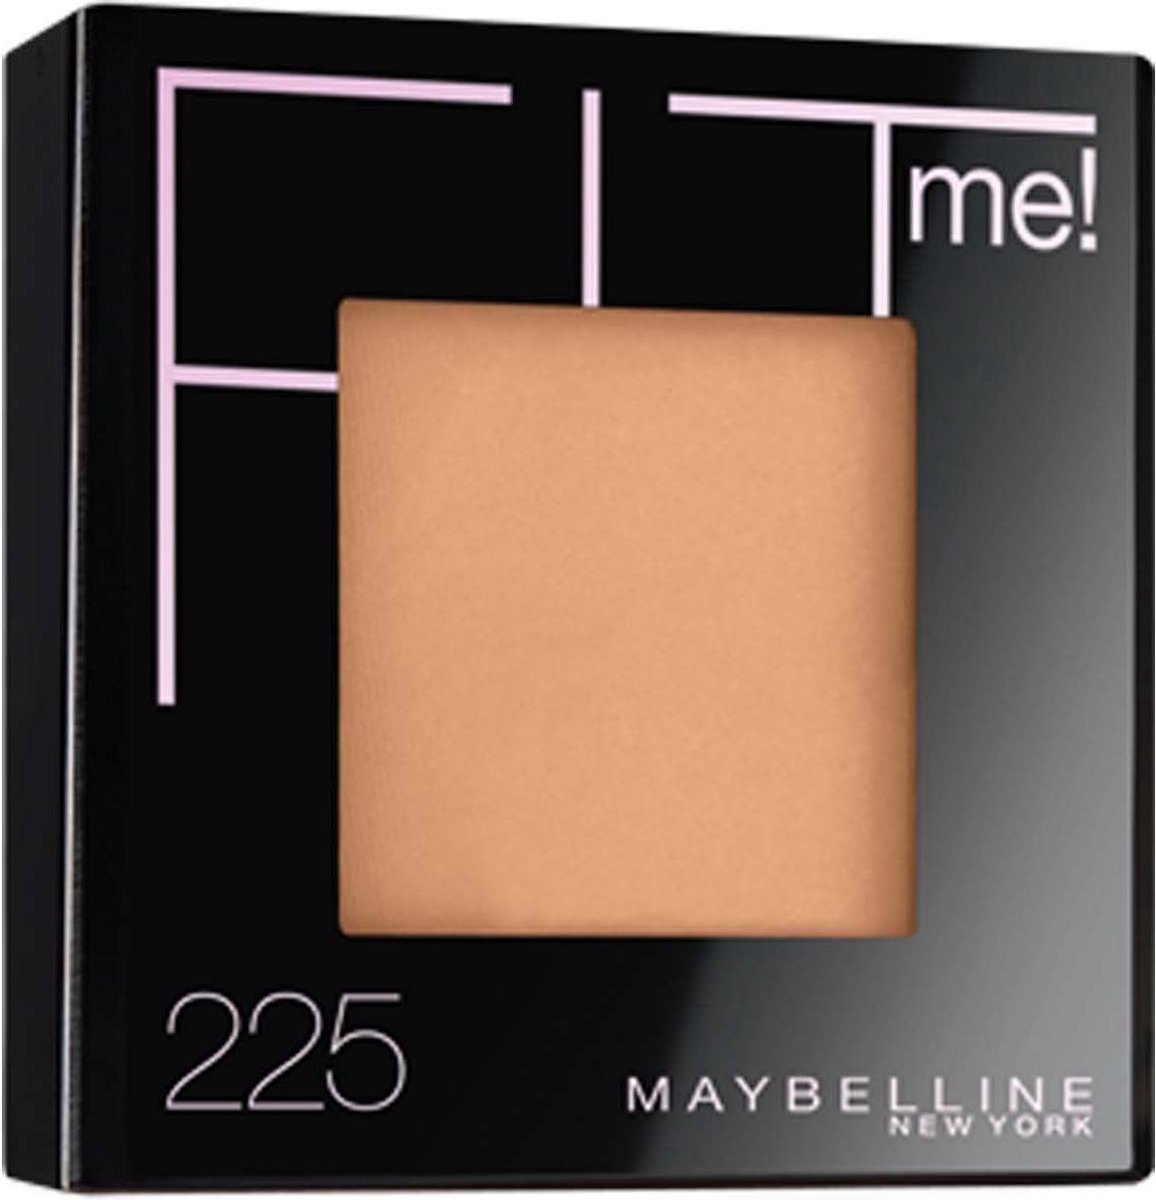 Maybelline Fit Me Pressed Powder - 225 Medium Buff - Maybelline